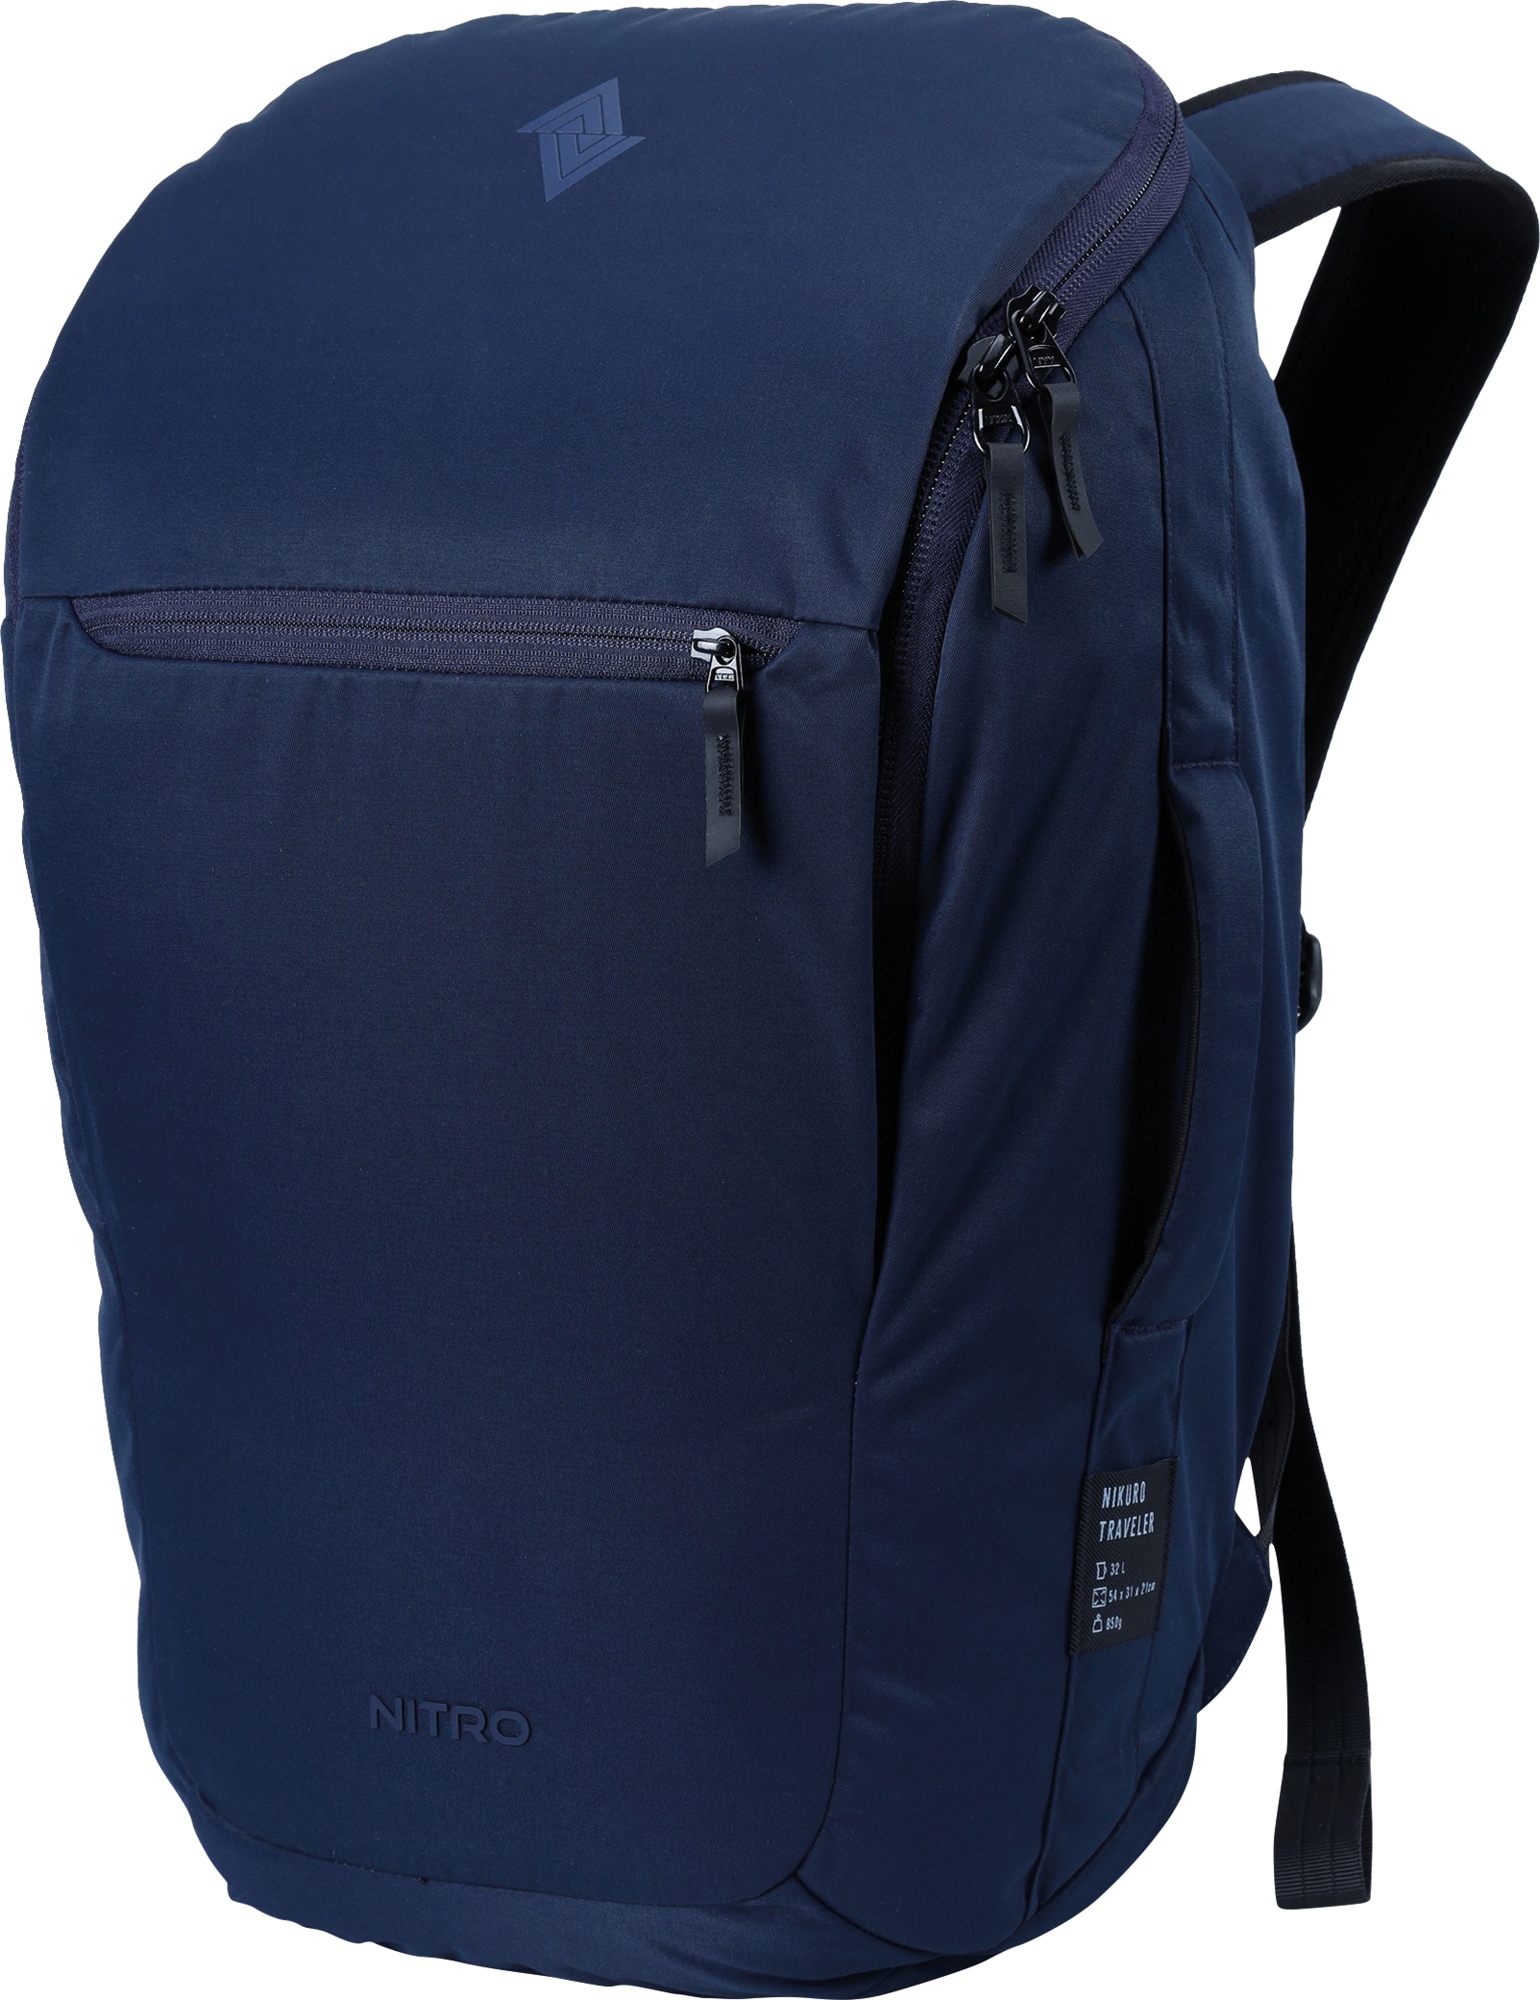 NITRO Freizeitrucksack »Nikuro Traveller«, Reisetasche, Travel Bag, Alltagsrucksack, Daypack